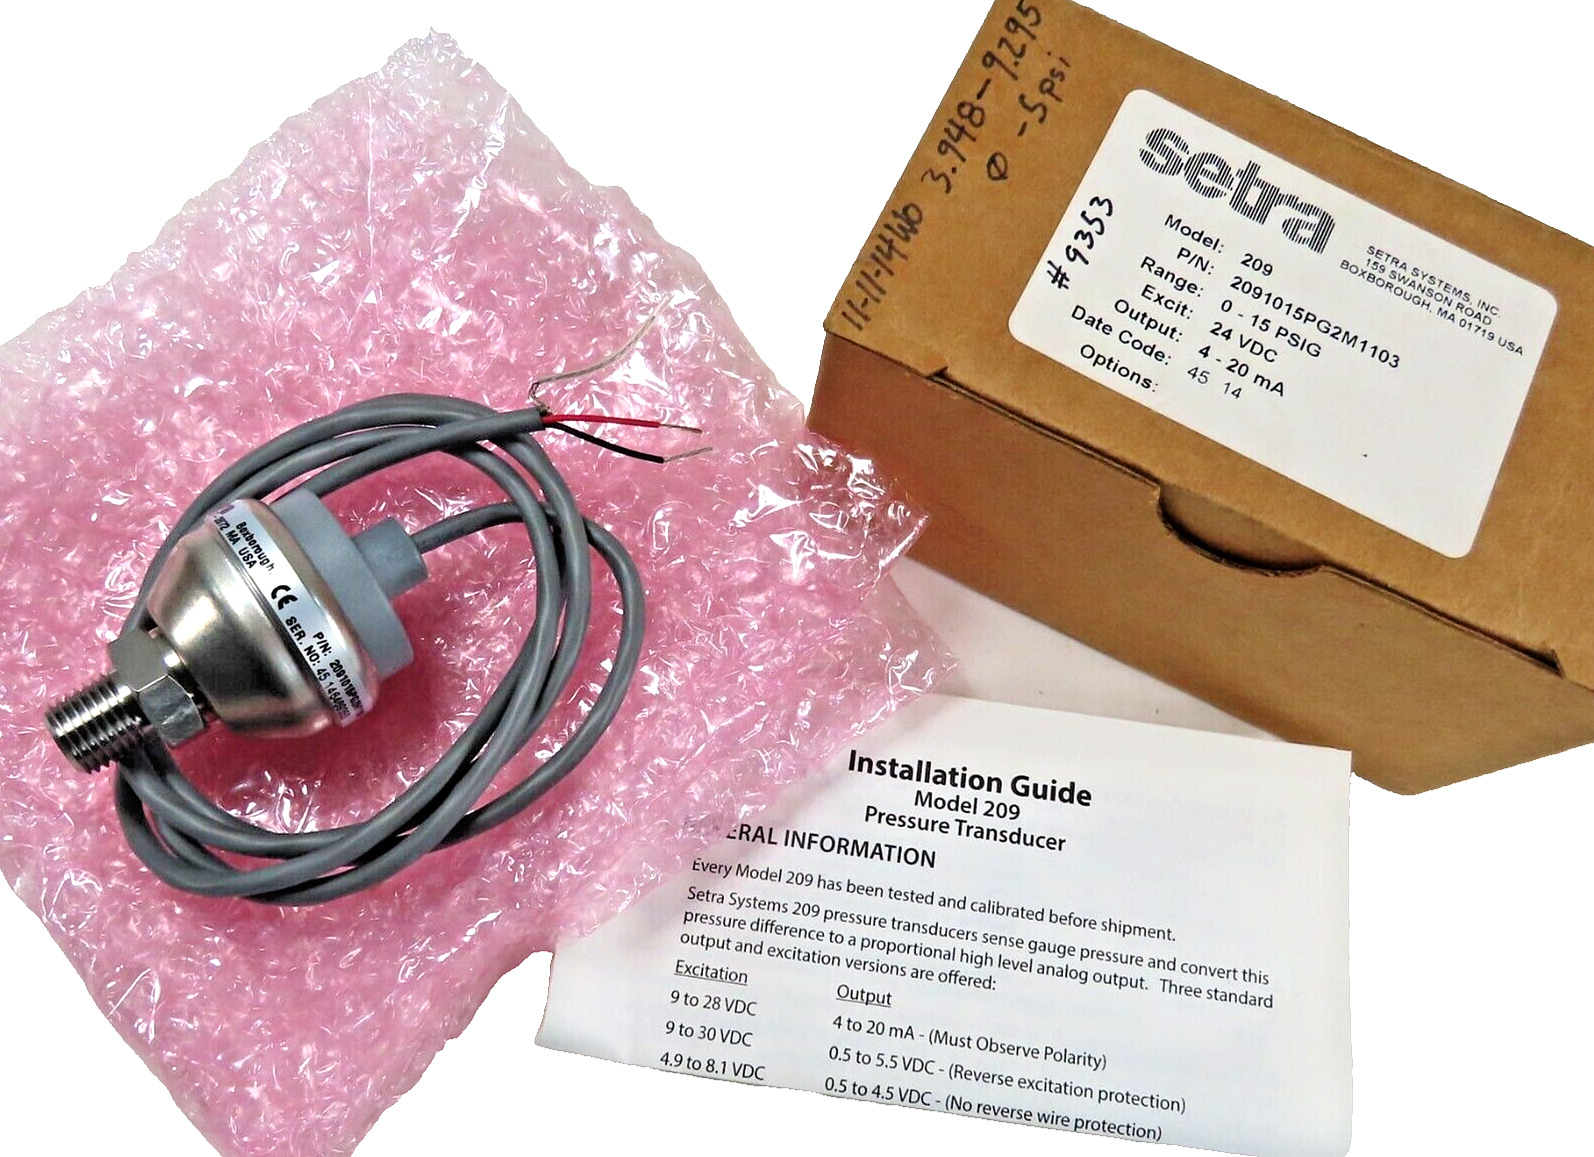 Setra Model 209 P/N 1015PG2M1103 Pressure Transducer, 0-15 PSIG, 24 VDC, 4-20mA